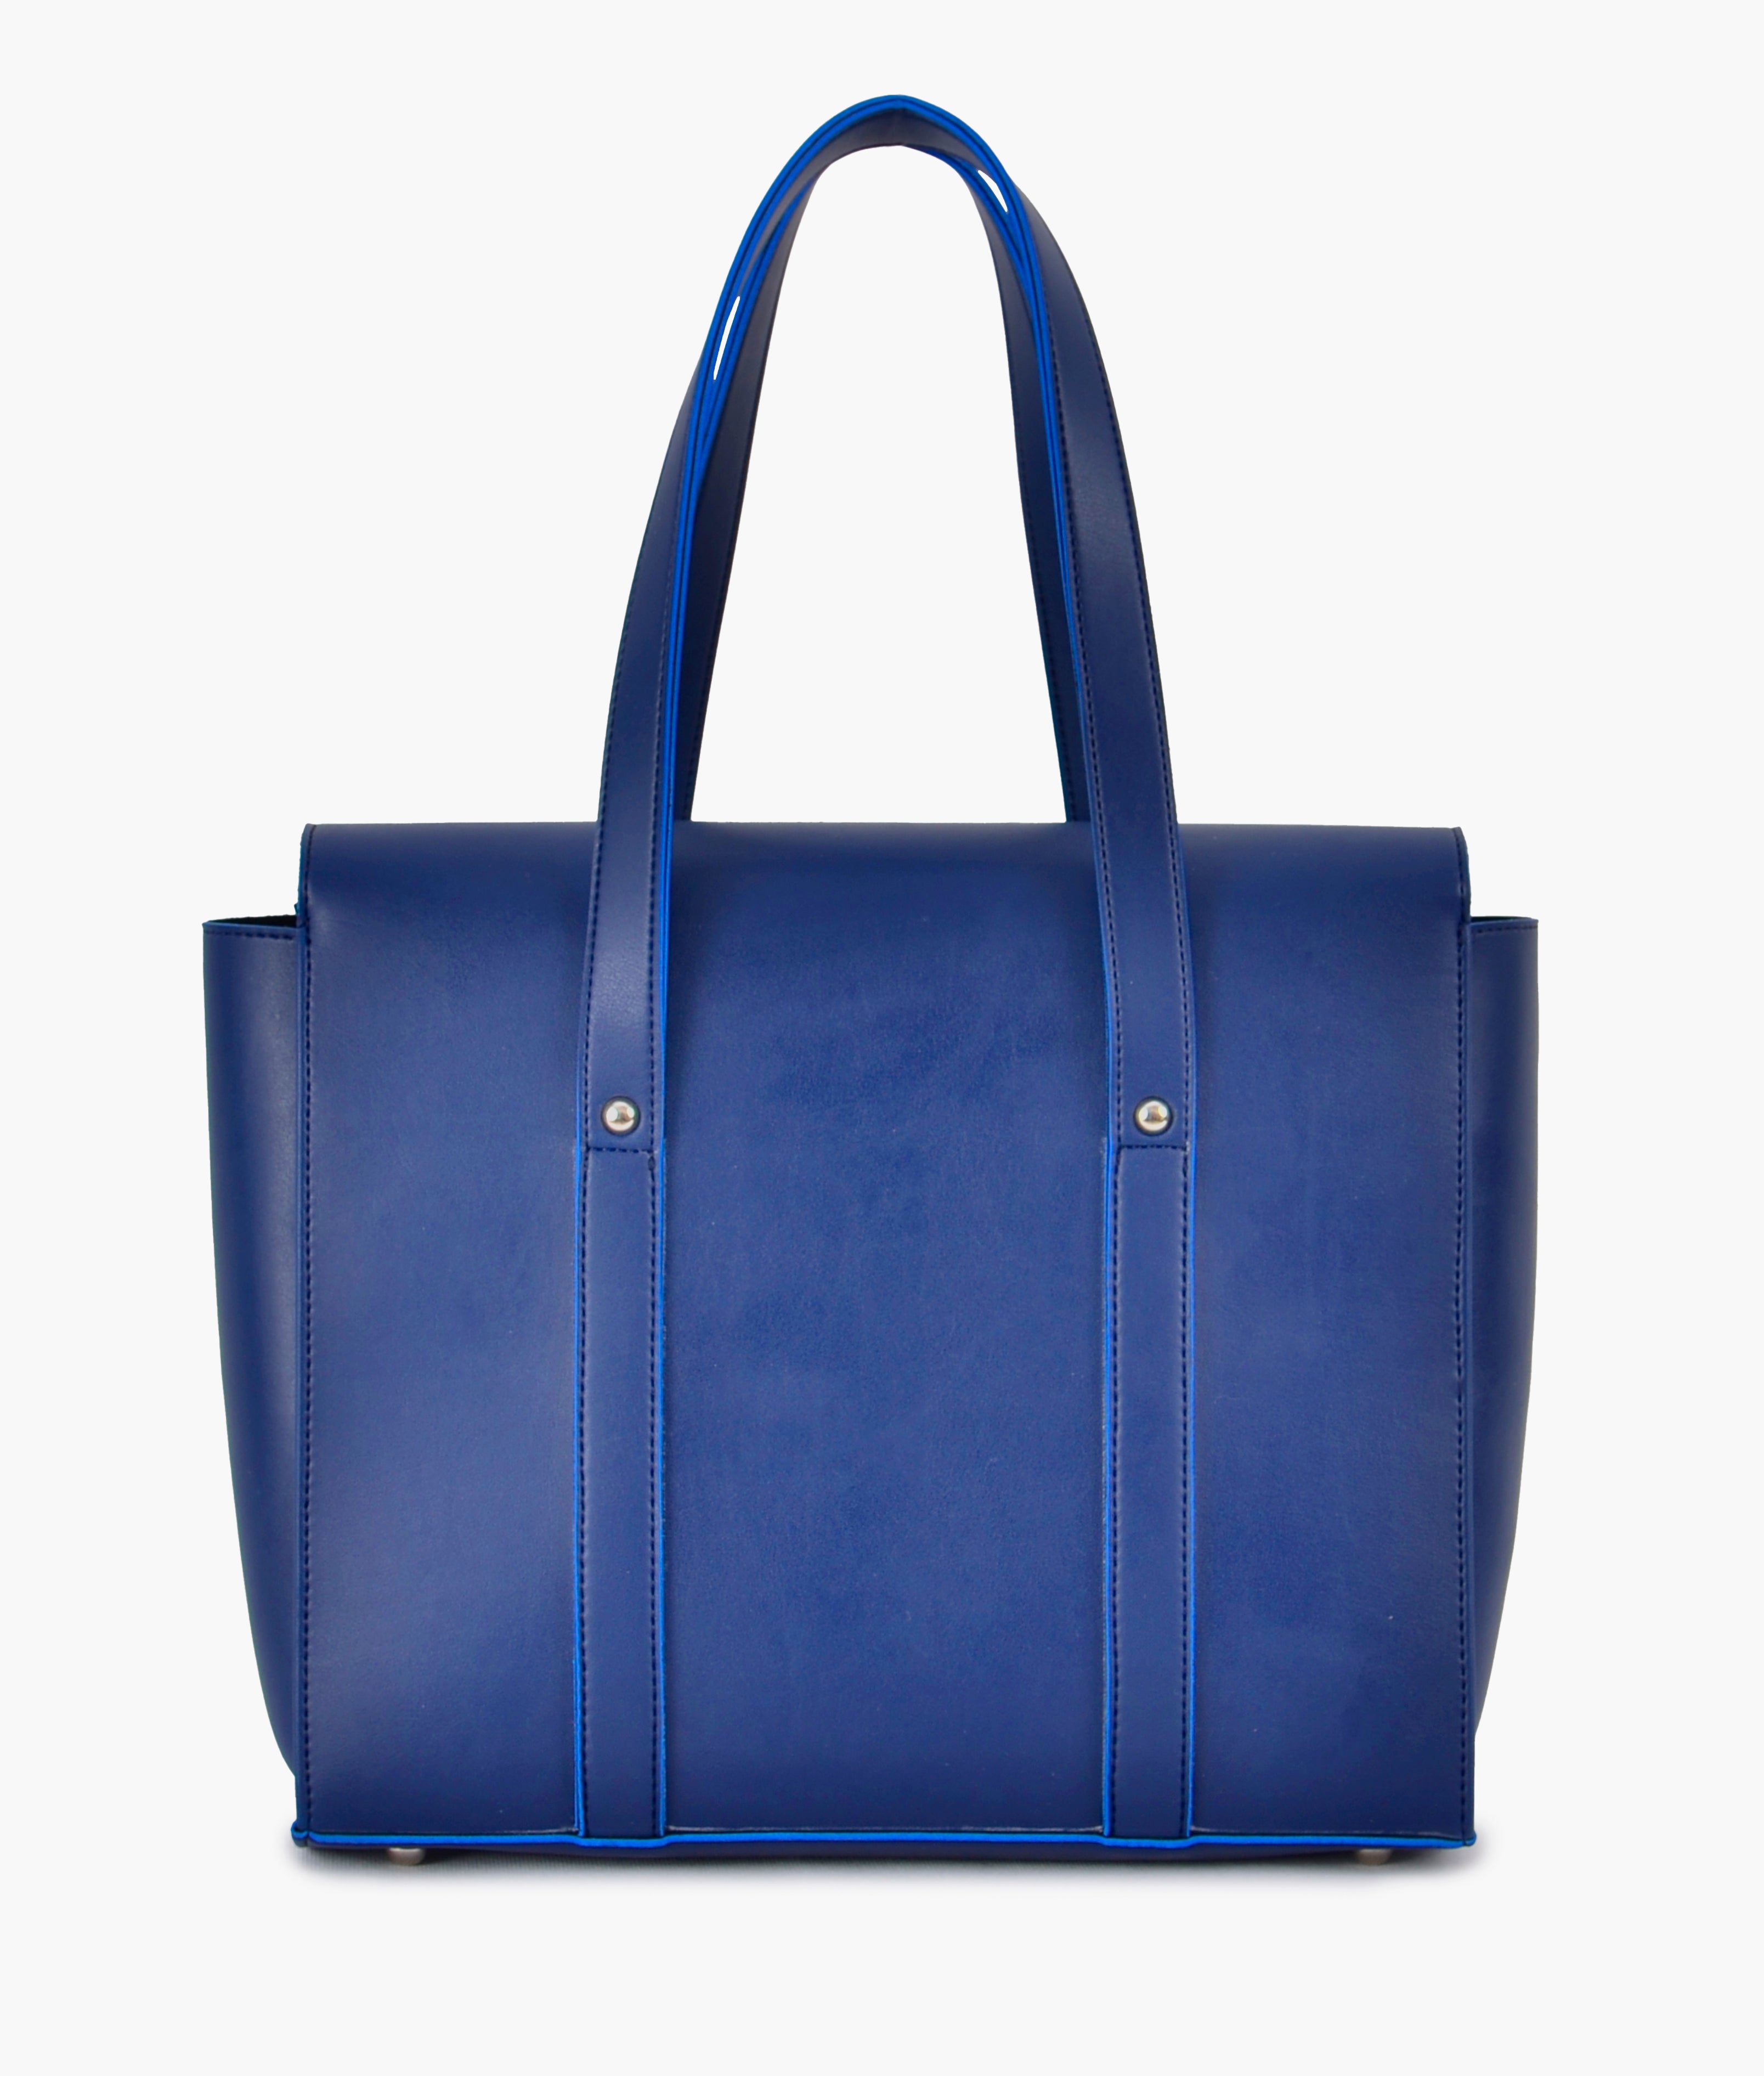 Blue carry-all satchel bag